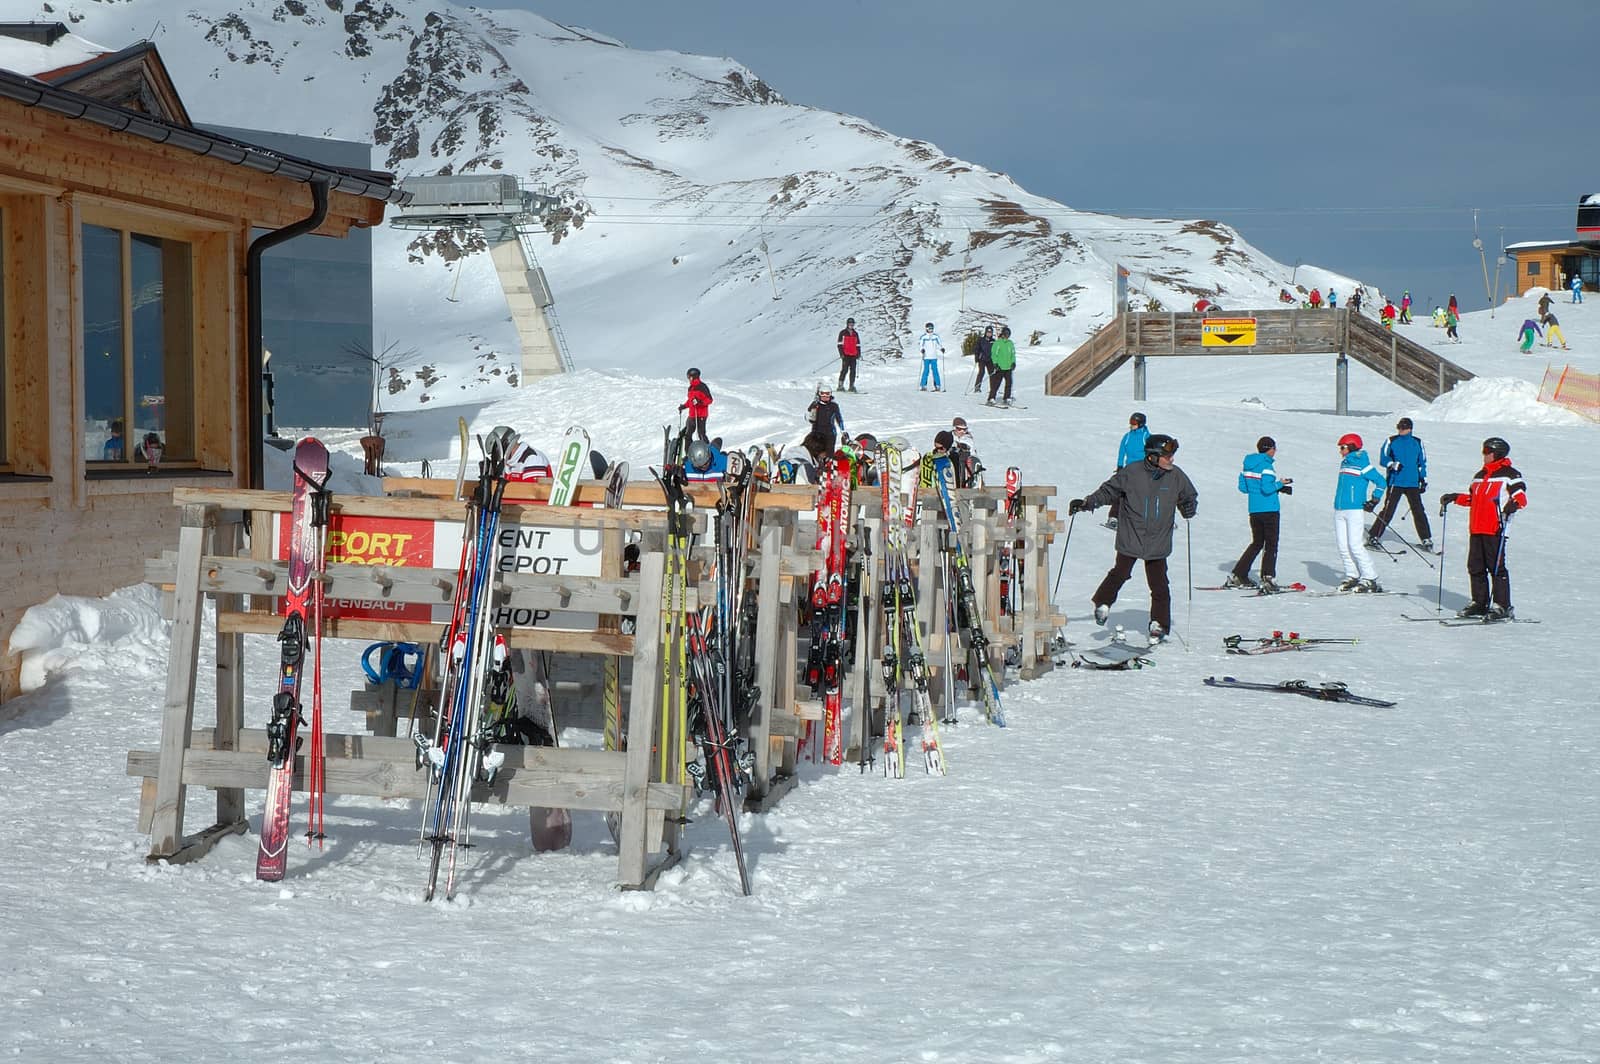 Ski and skiers nerby drag lift by janhetman